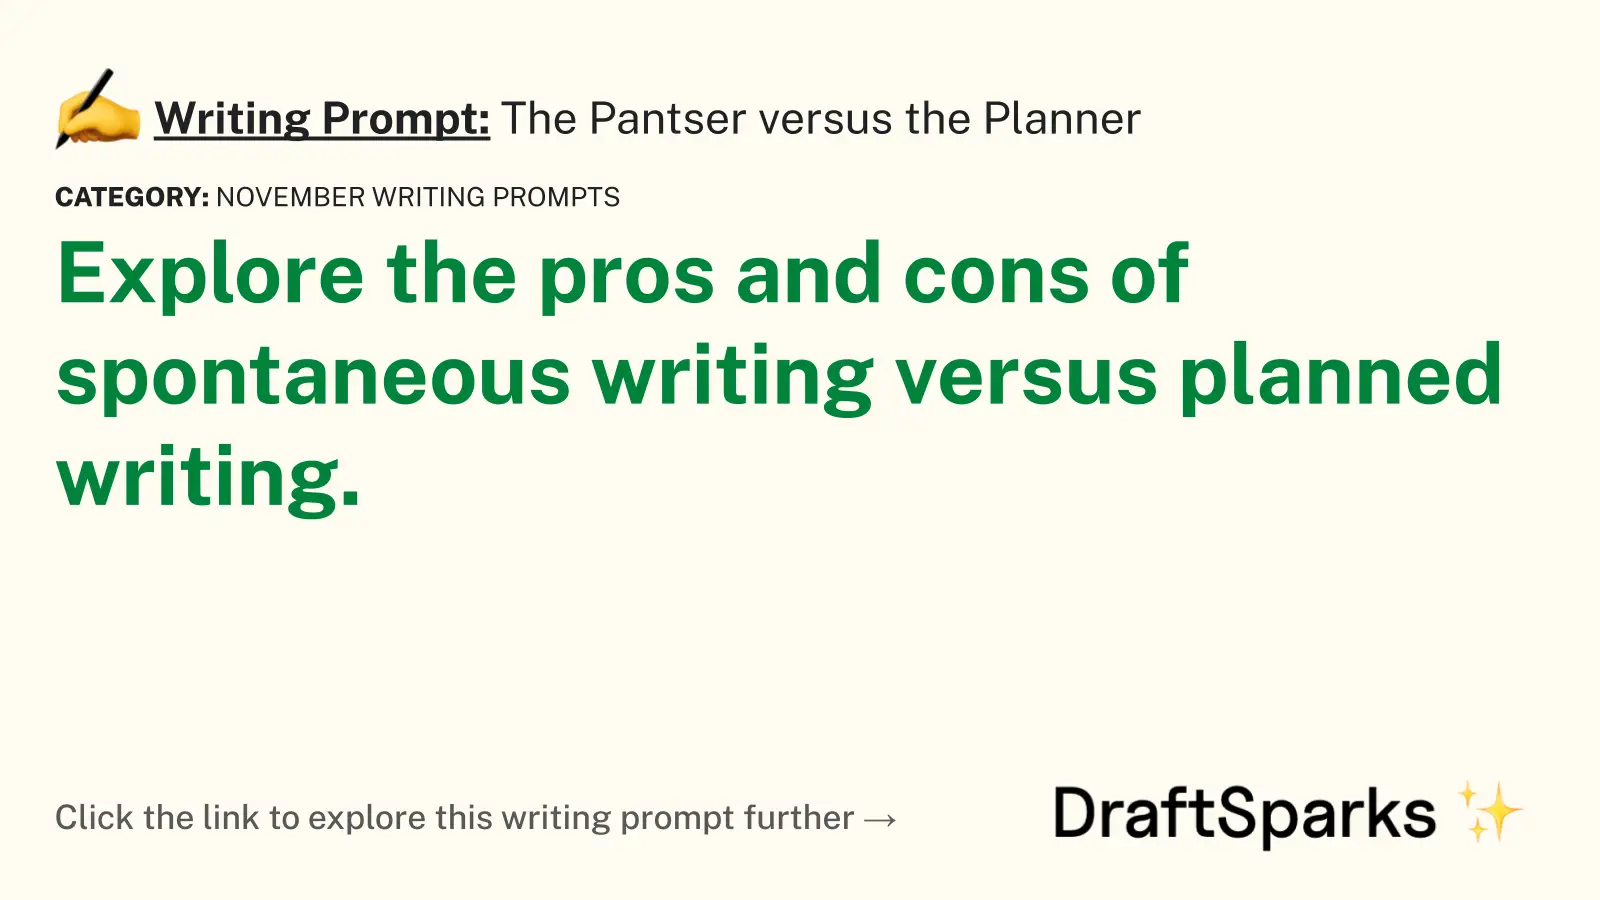 The Pantser versus the Planner